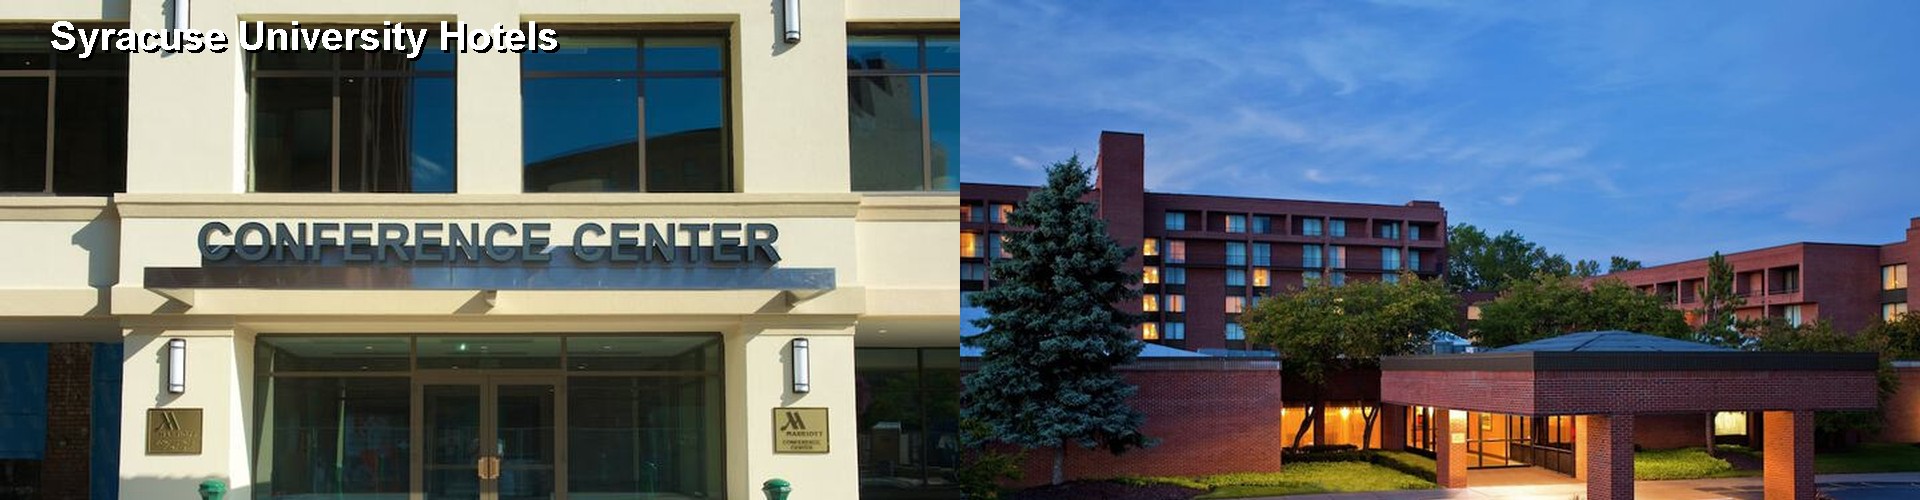 5 Best Hotels near Syracuse University